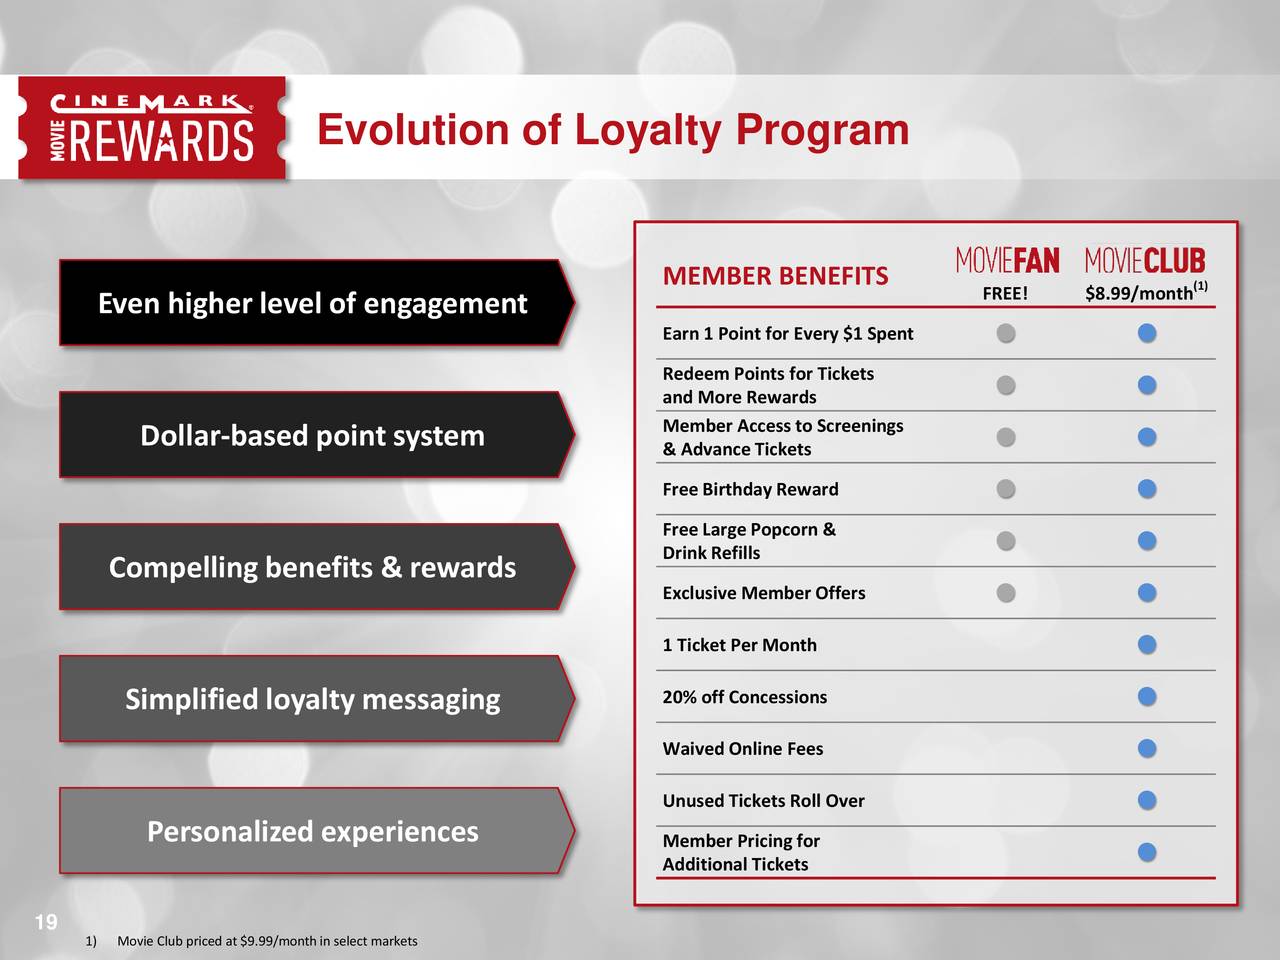 Evolution of Loyalty Program